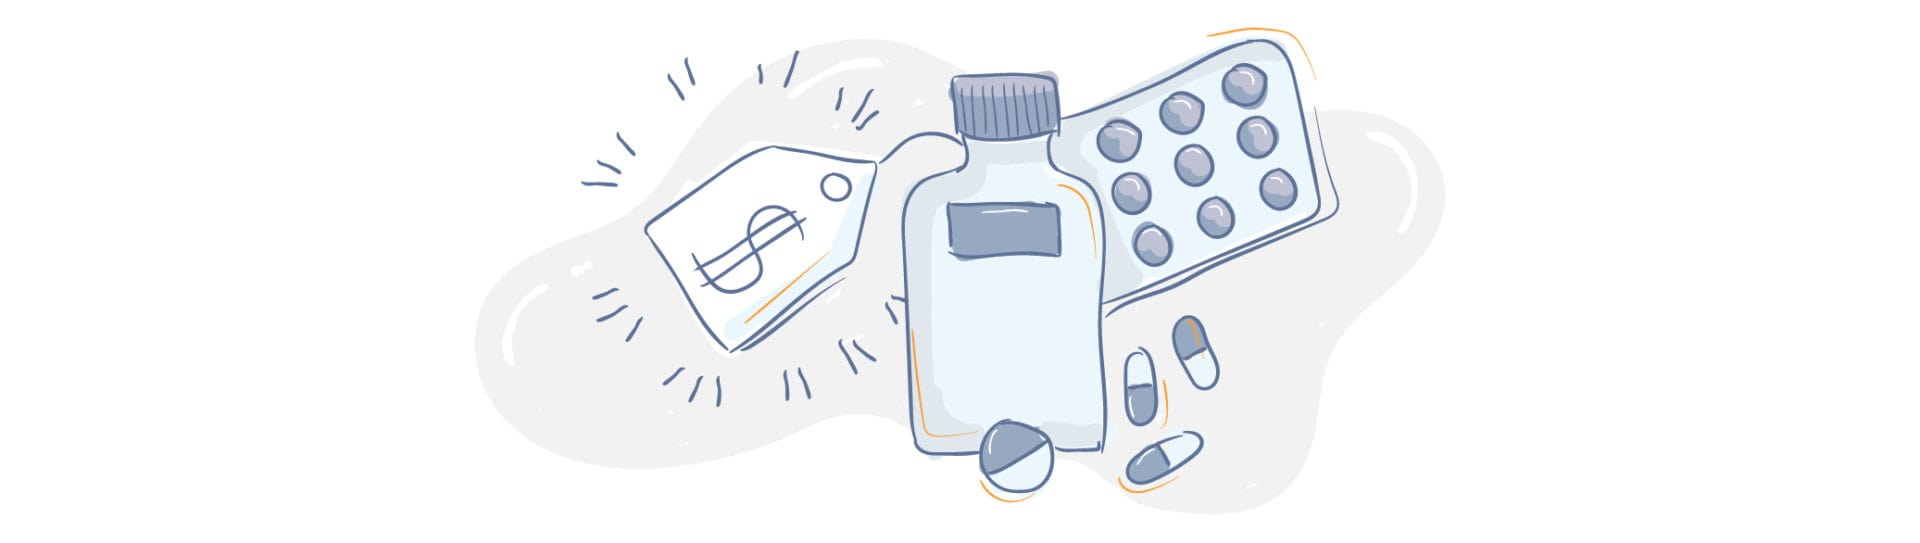 association health plans | pill price tag